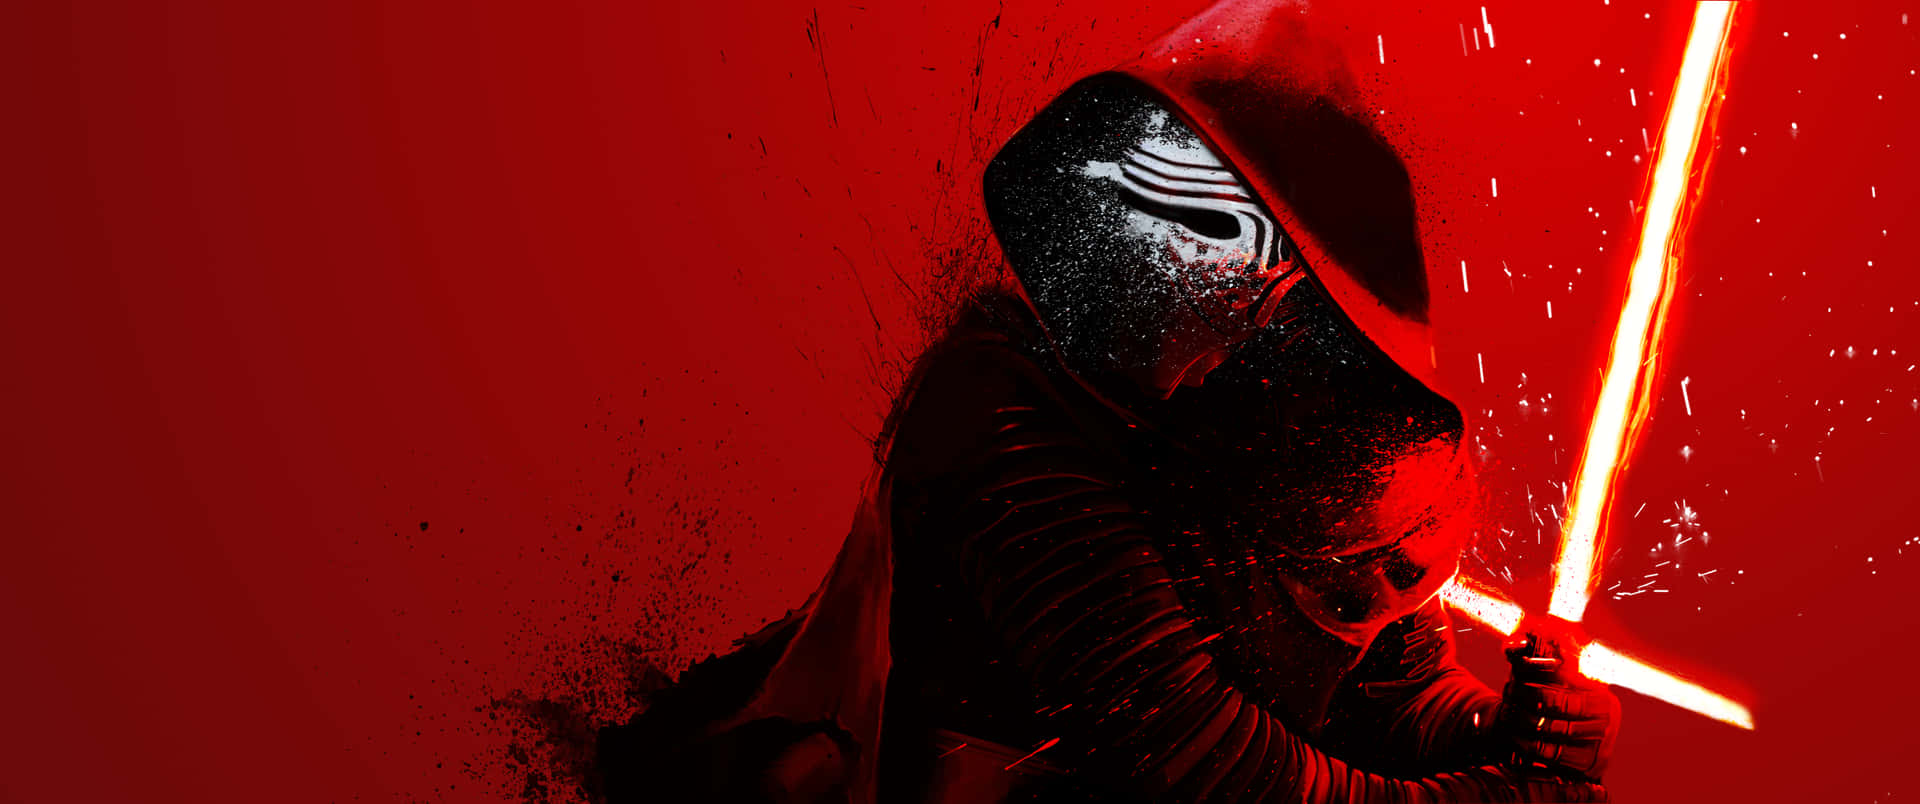 Darth Vader’s Dark Legacy Lives on in Kylo Ren Wallpaper